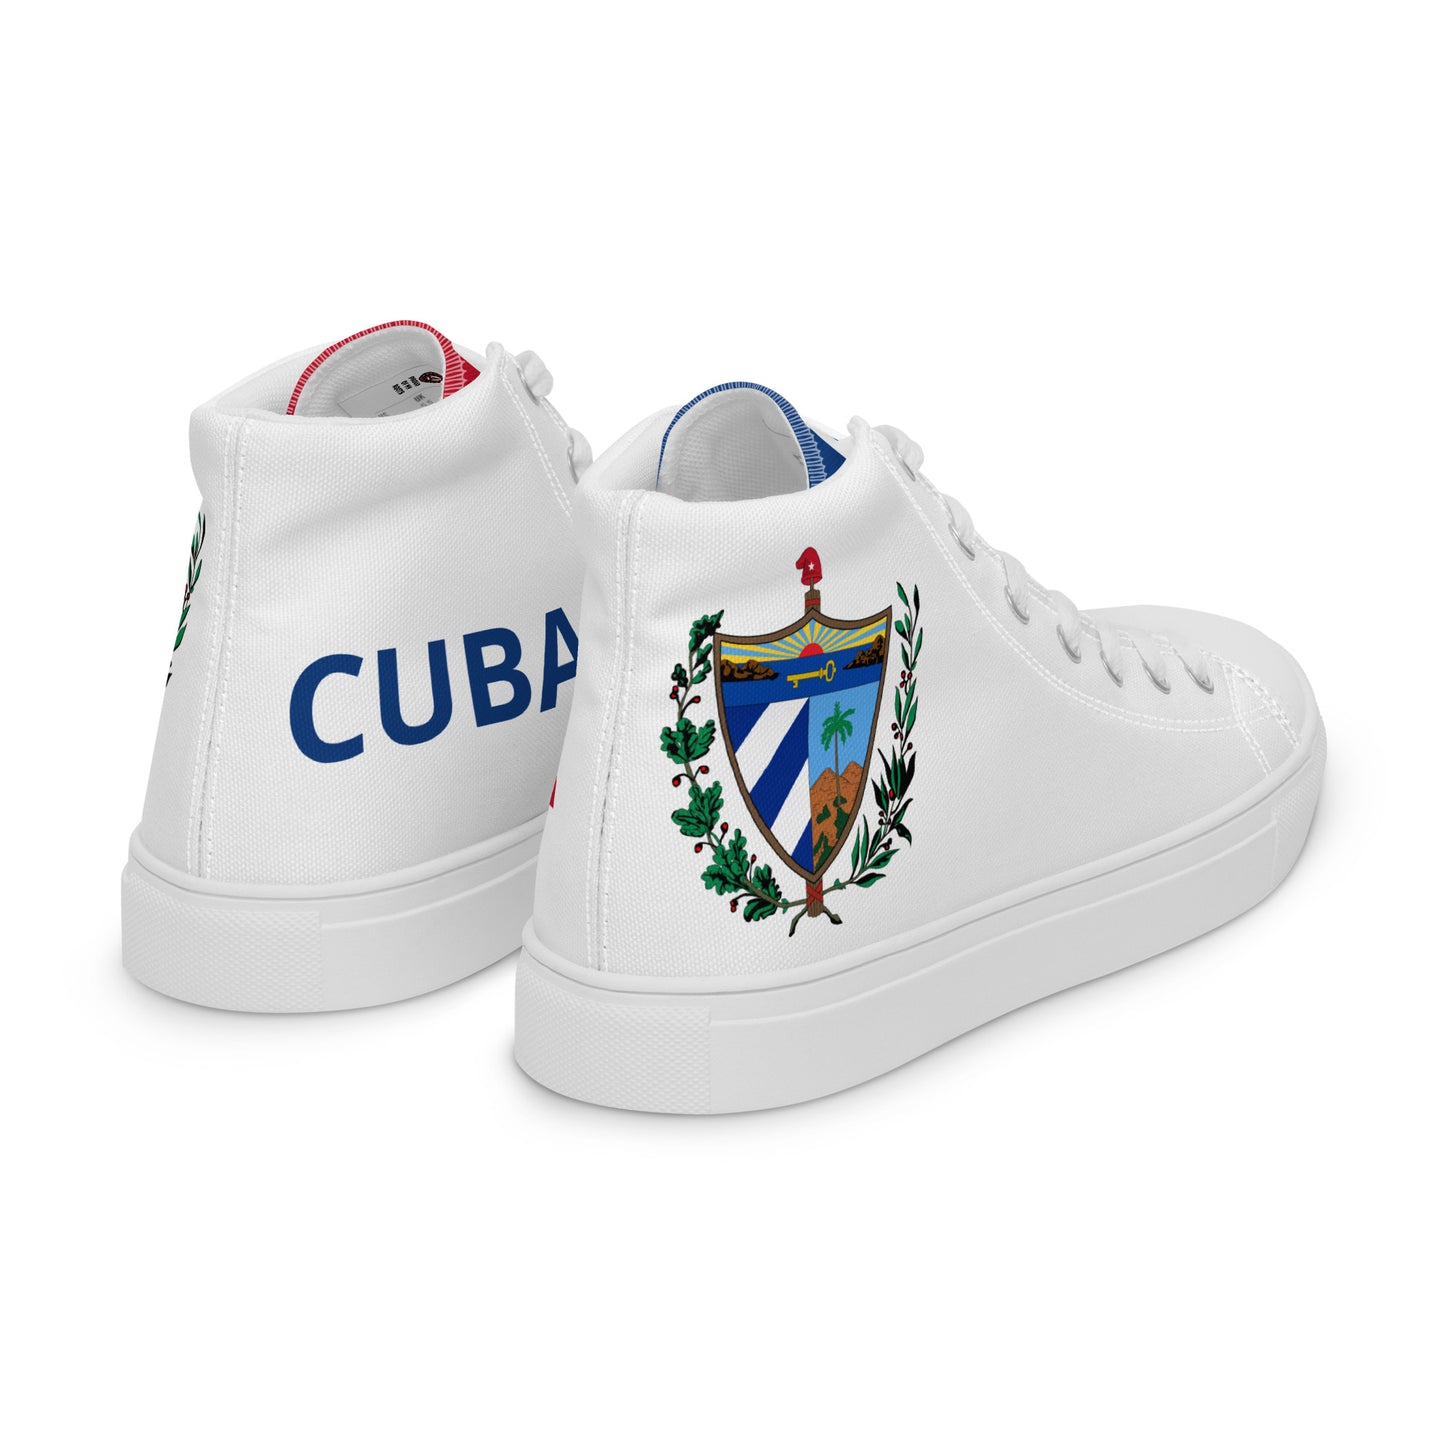 Cuba - Men - White - High top shoes